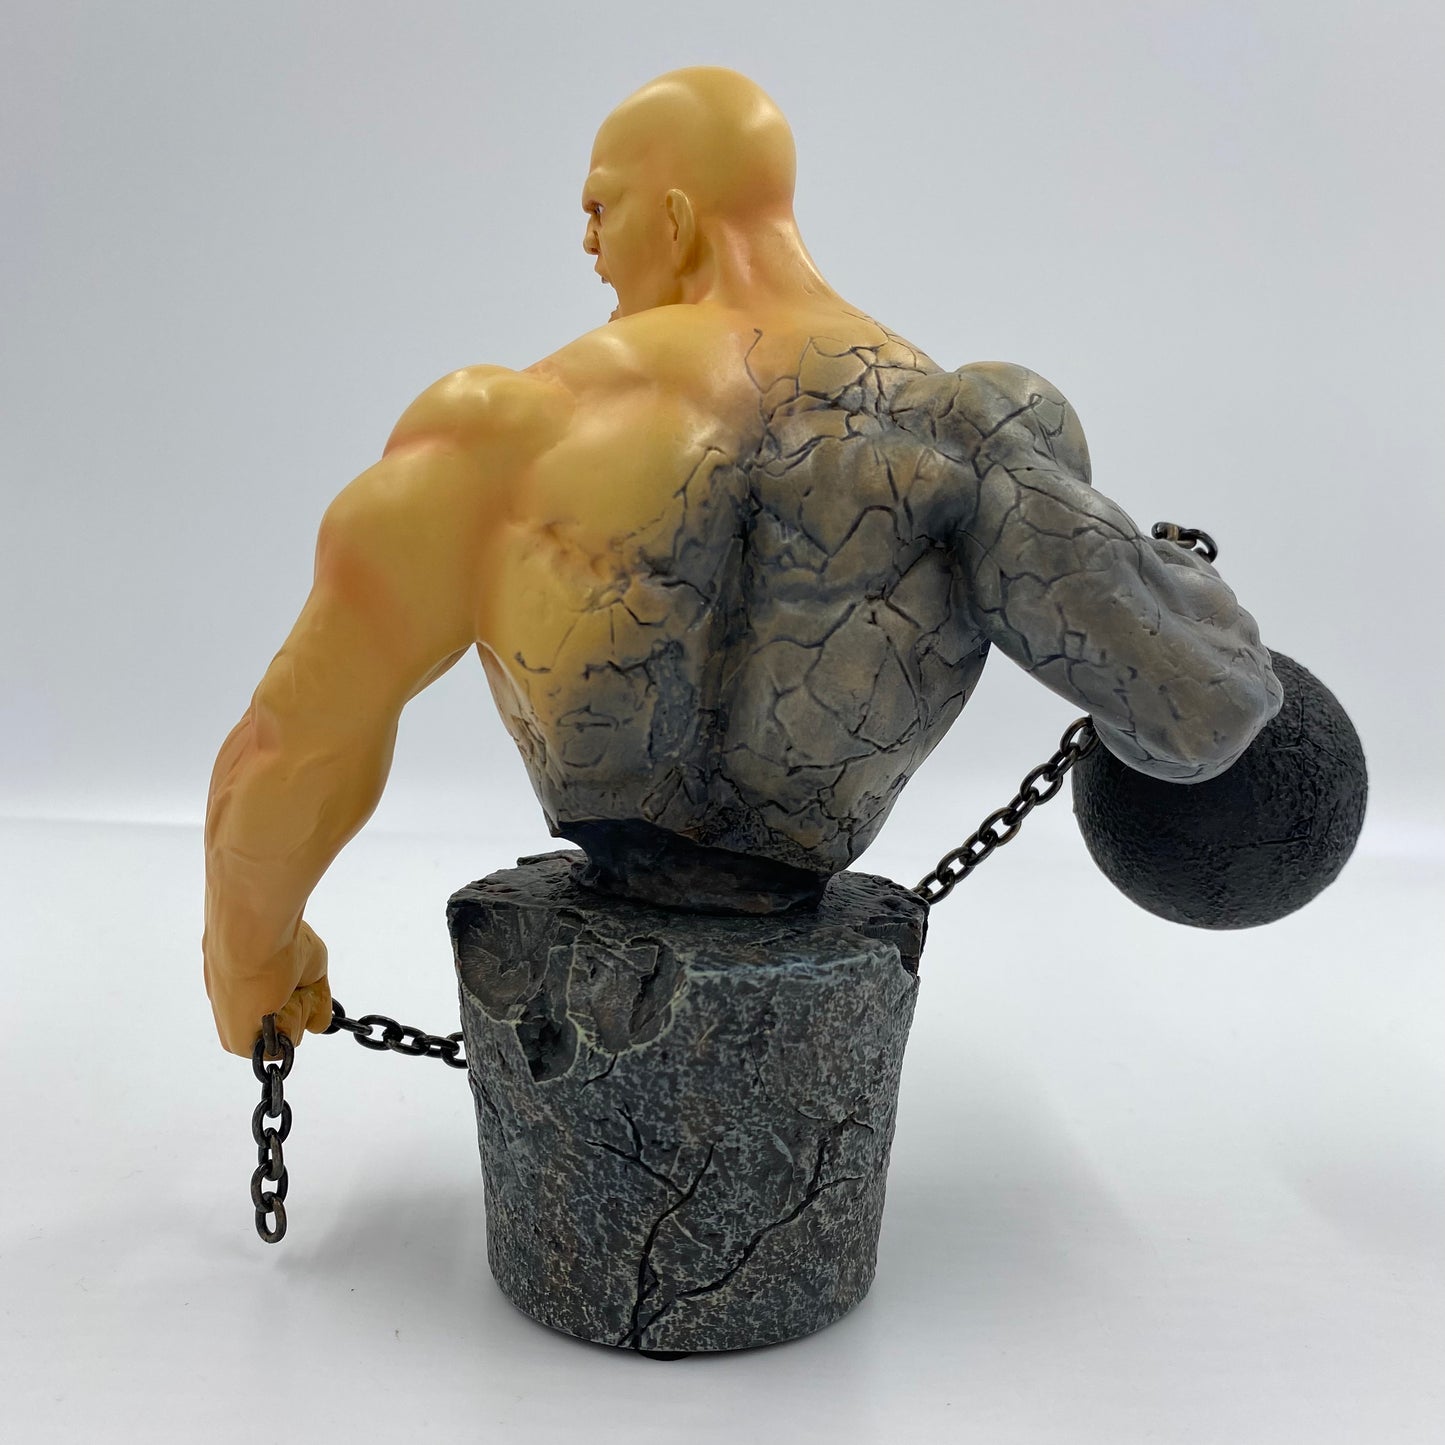 Absorbing Man Marvel mini-bust (2005) Bowen Designs